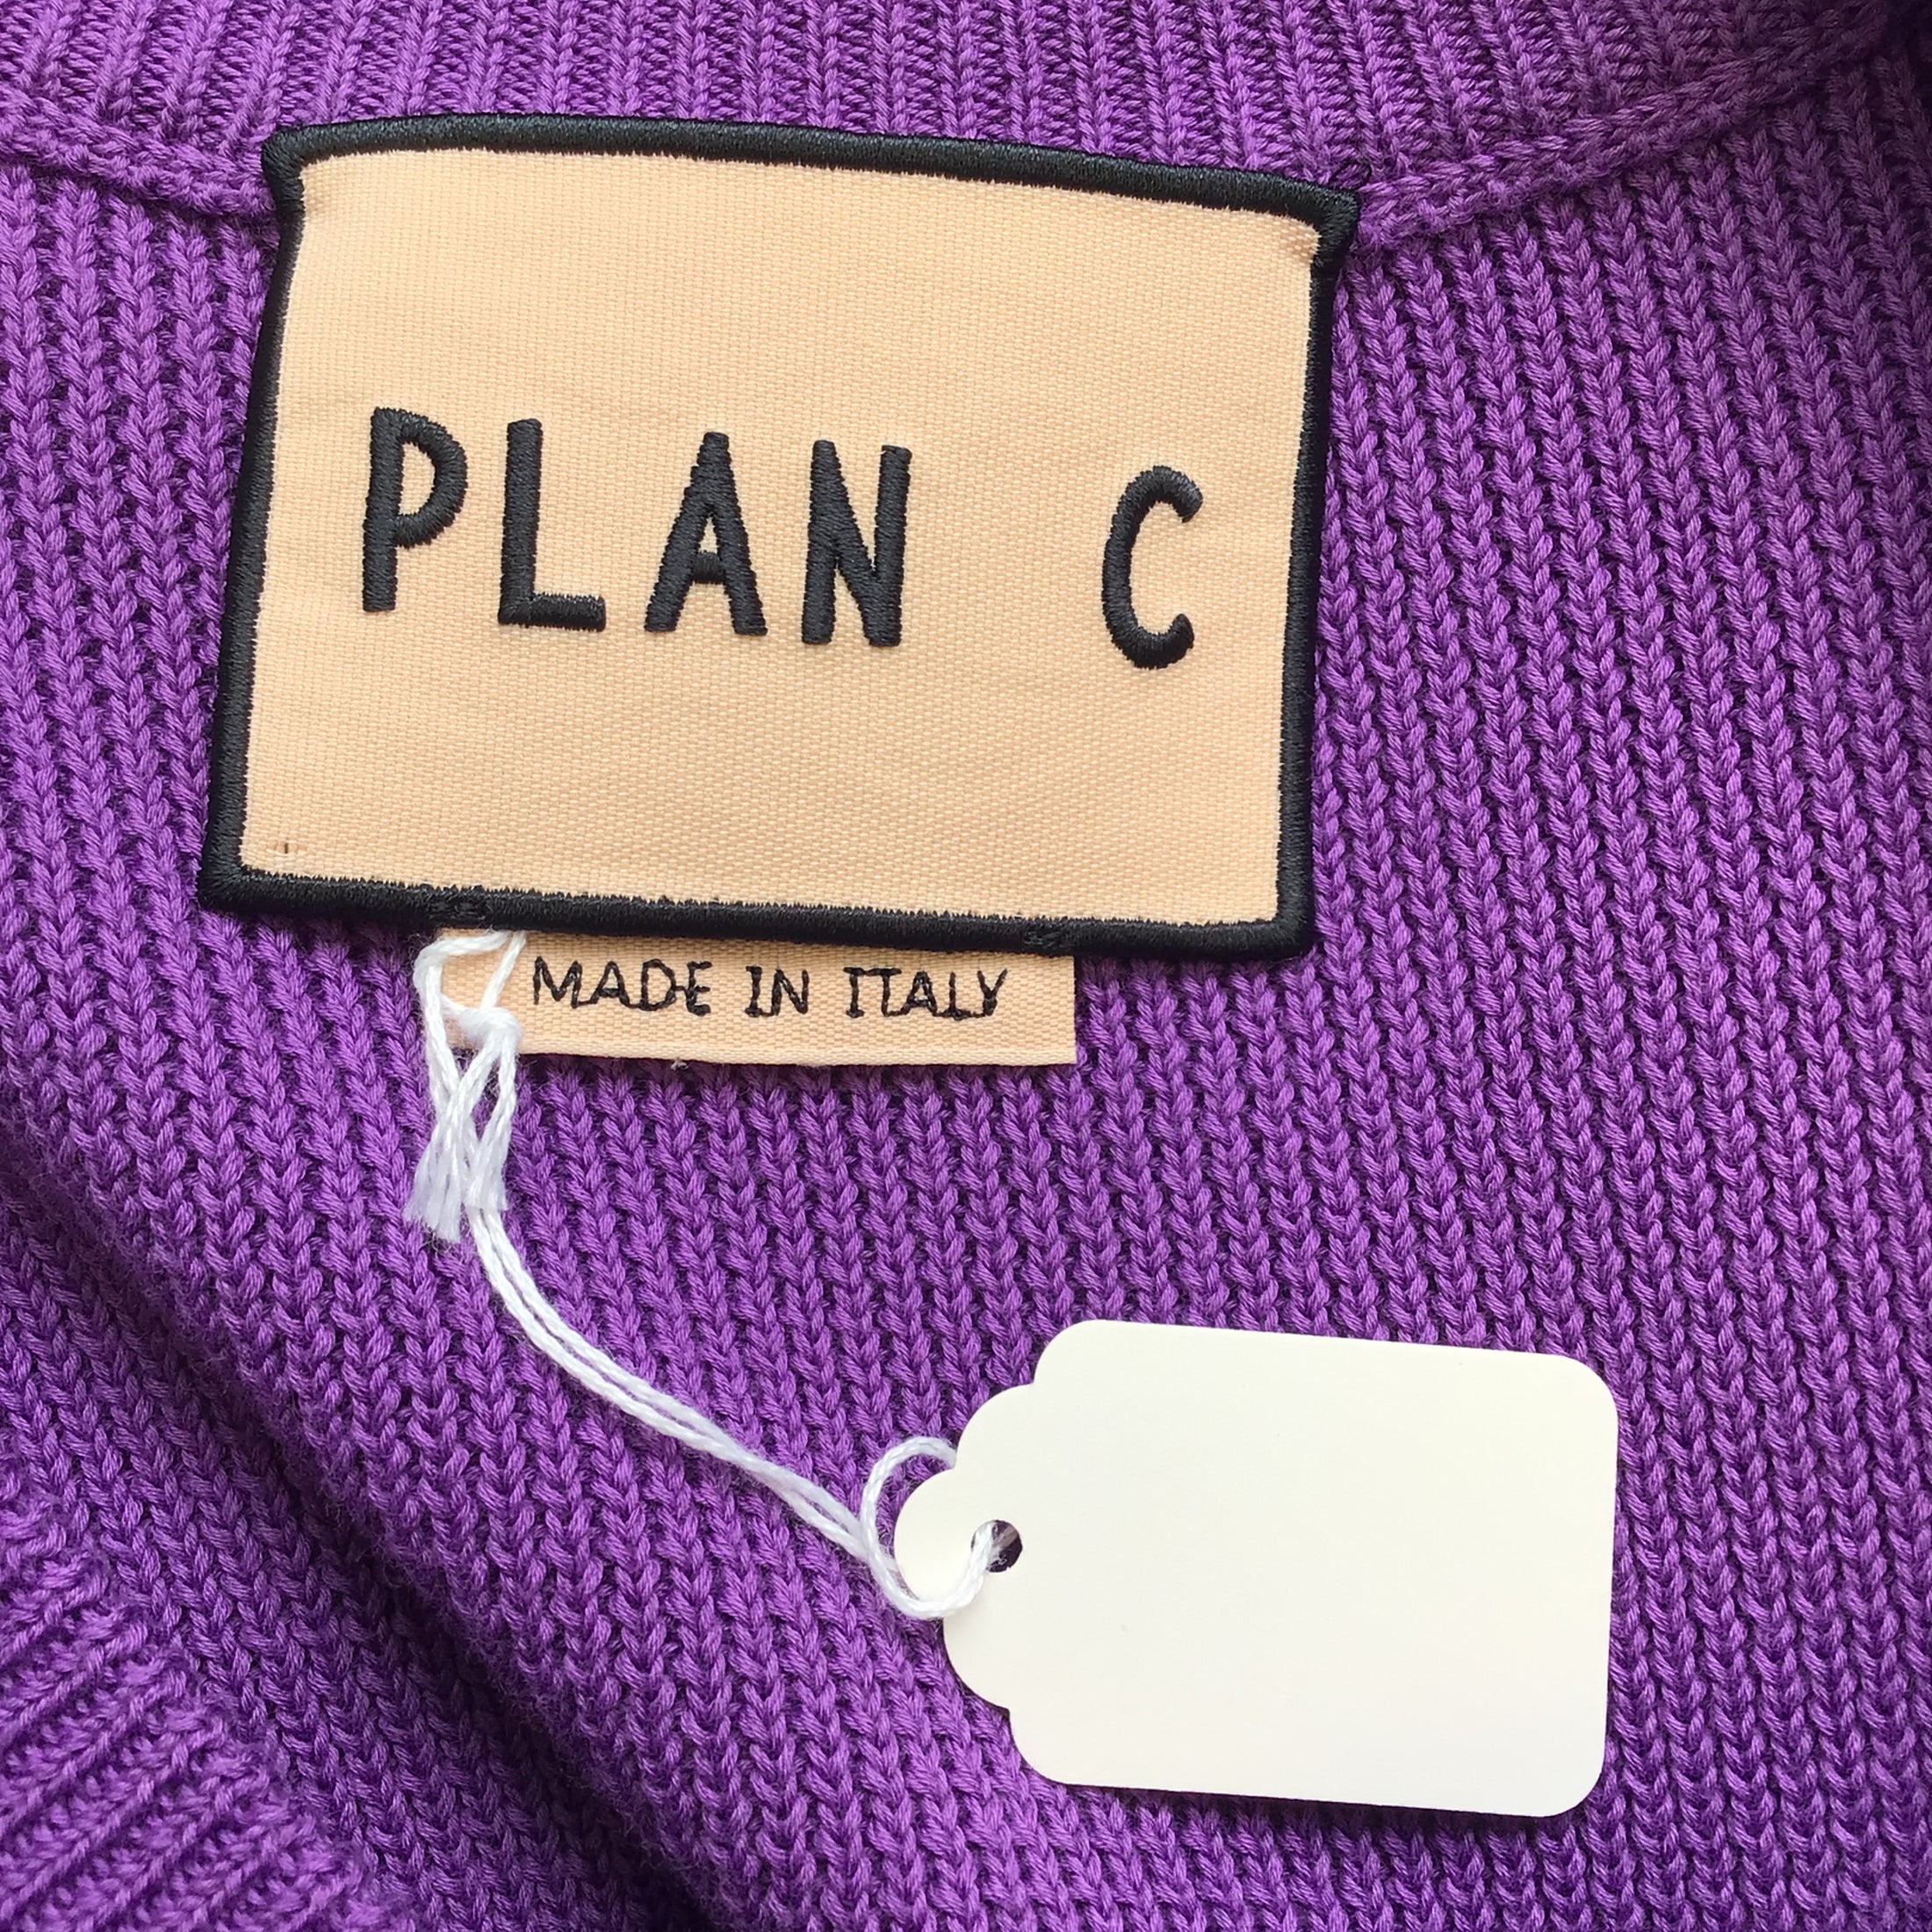 Plan C Purple / Orange Multi Patterned Knit Sleeveless V-Neck Cotton Knit Sweater